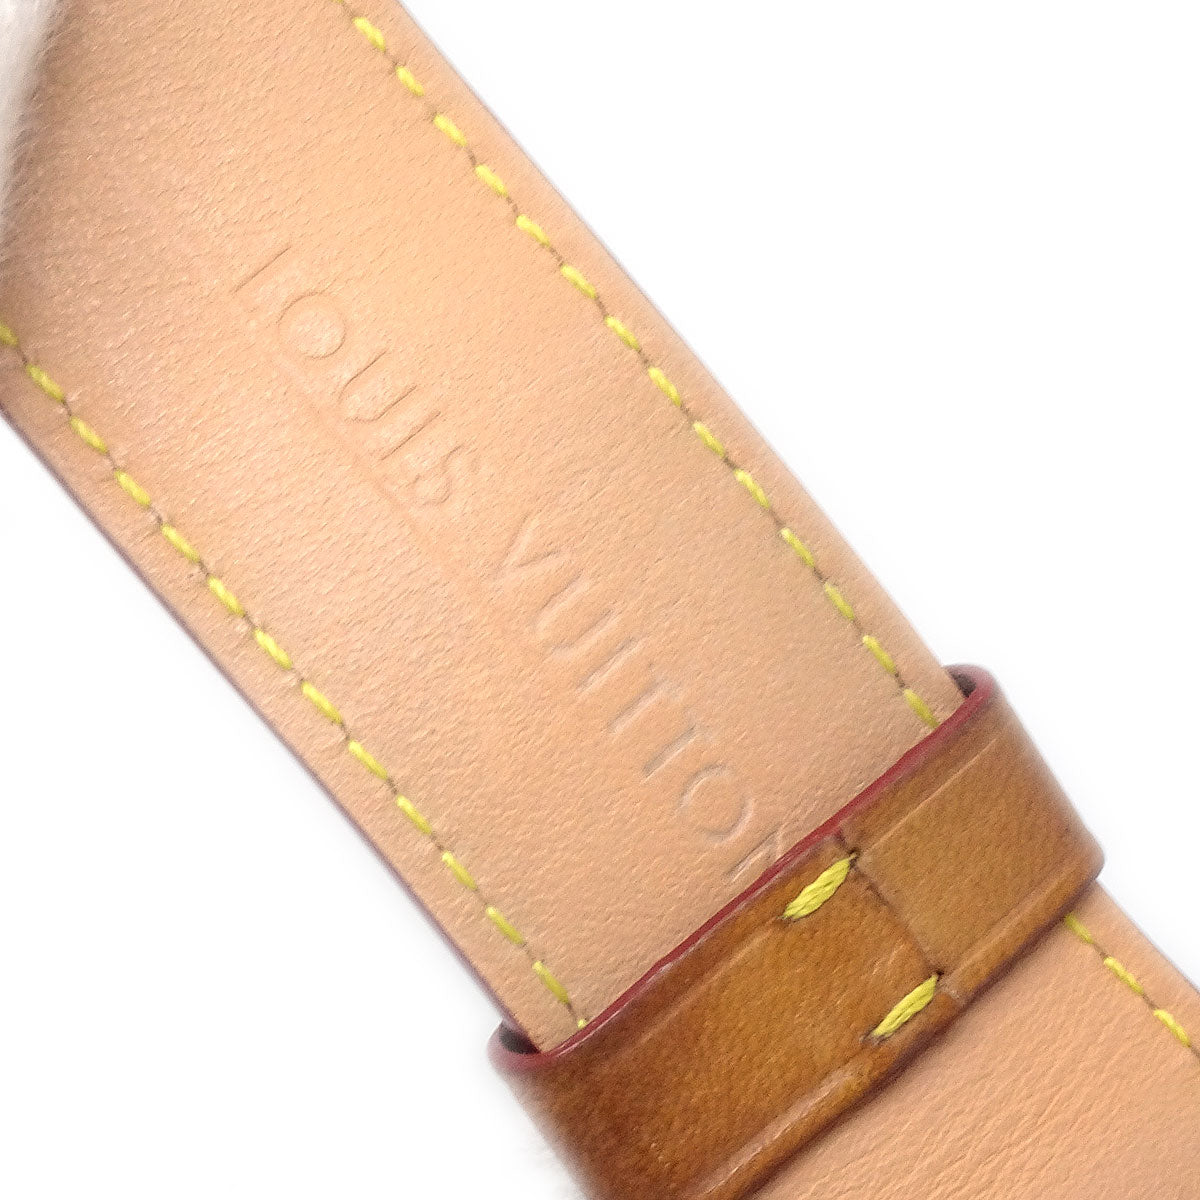 Louis Vuitton Monogram Multicolor Tambour Watch Q1211